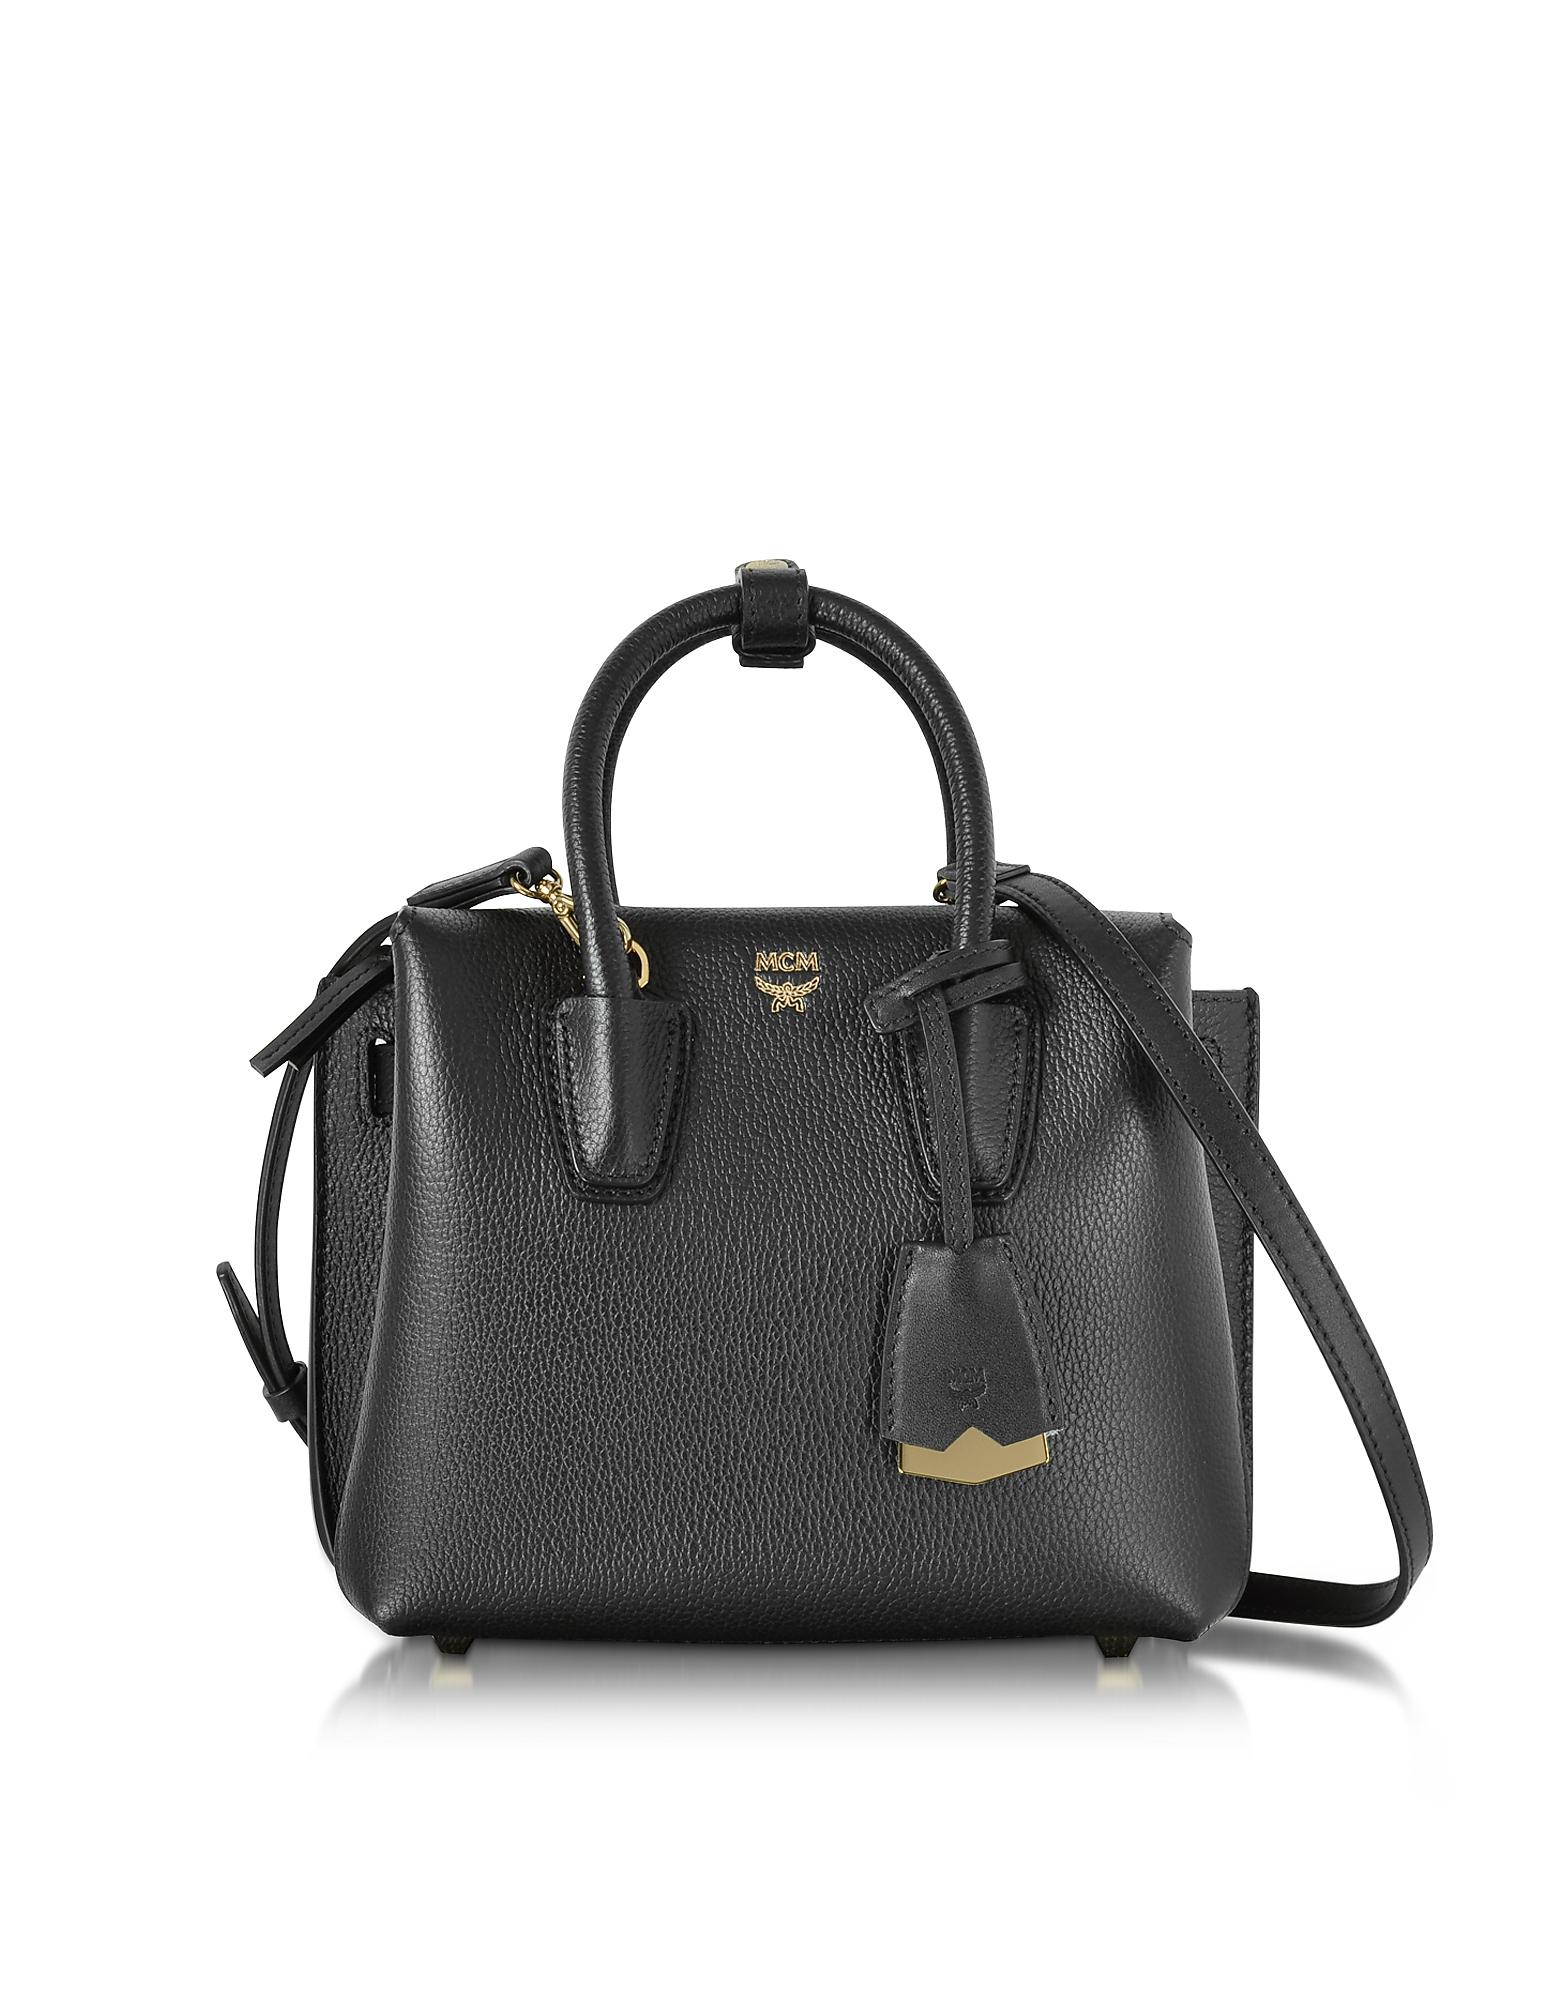 Lyst - Mcm Black Mini Milla Tote Bag in Black - Save 30%